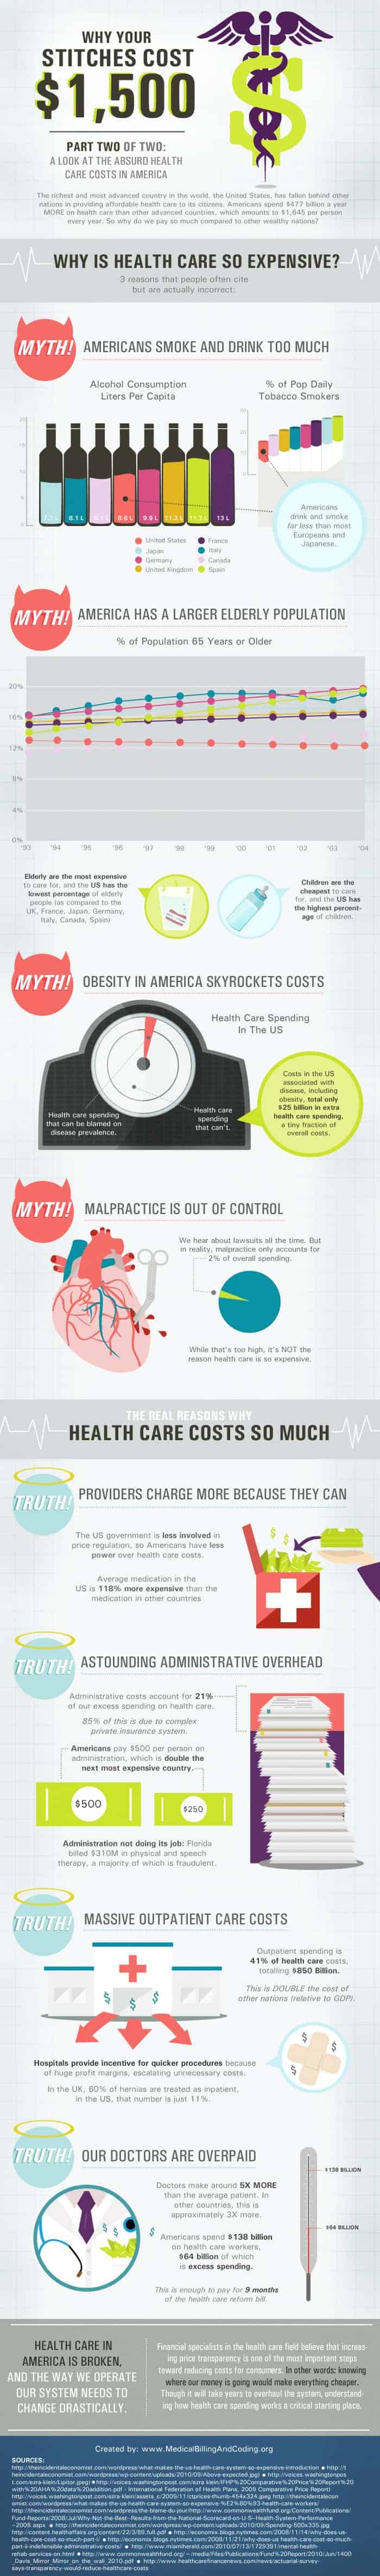 Medical-Costs-2.jpg